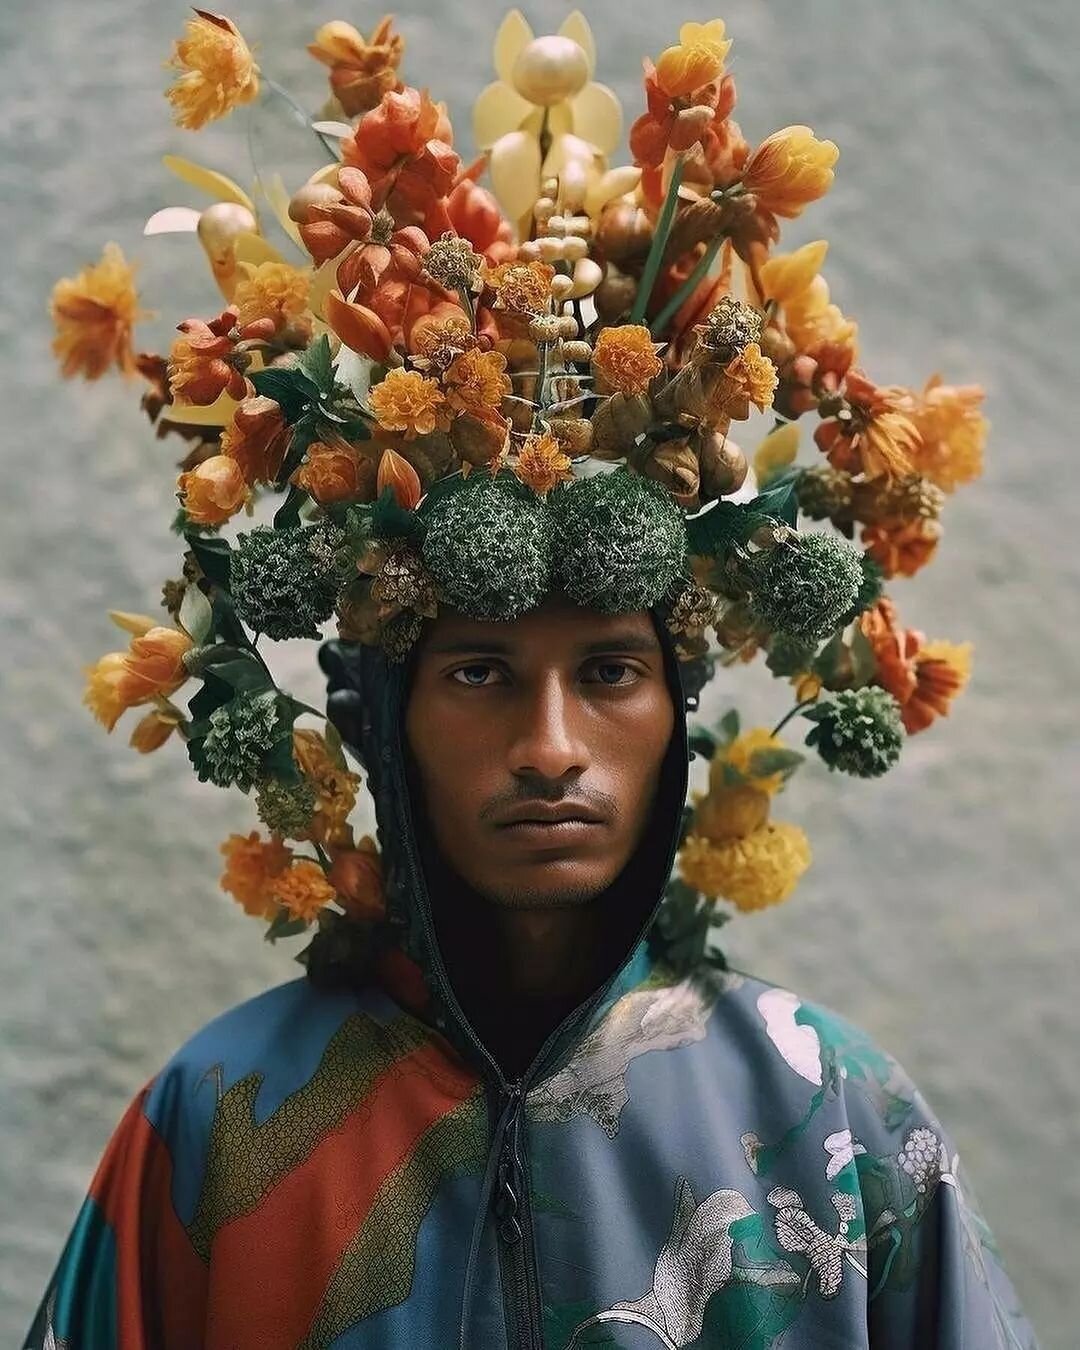 Where high fashion meets botanical elegance &ndash;a stunning series of intricately designed, floral headwear by @hatterist

Image credits - @prazzleinc &amp;&nbsp;@samaritual